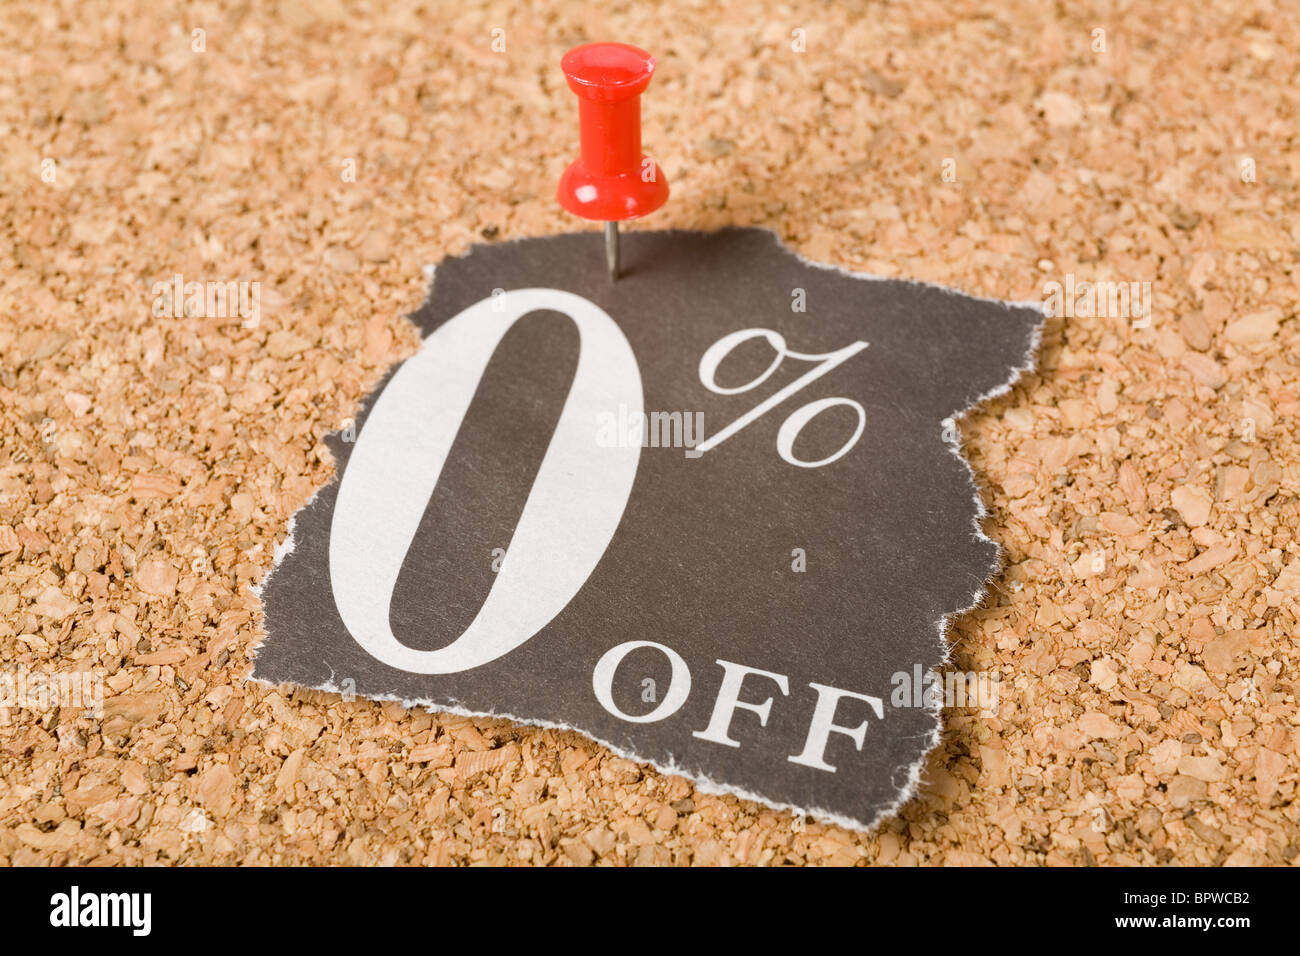 zero percent off, concept of sale, marketing Stock Photo